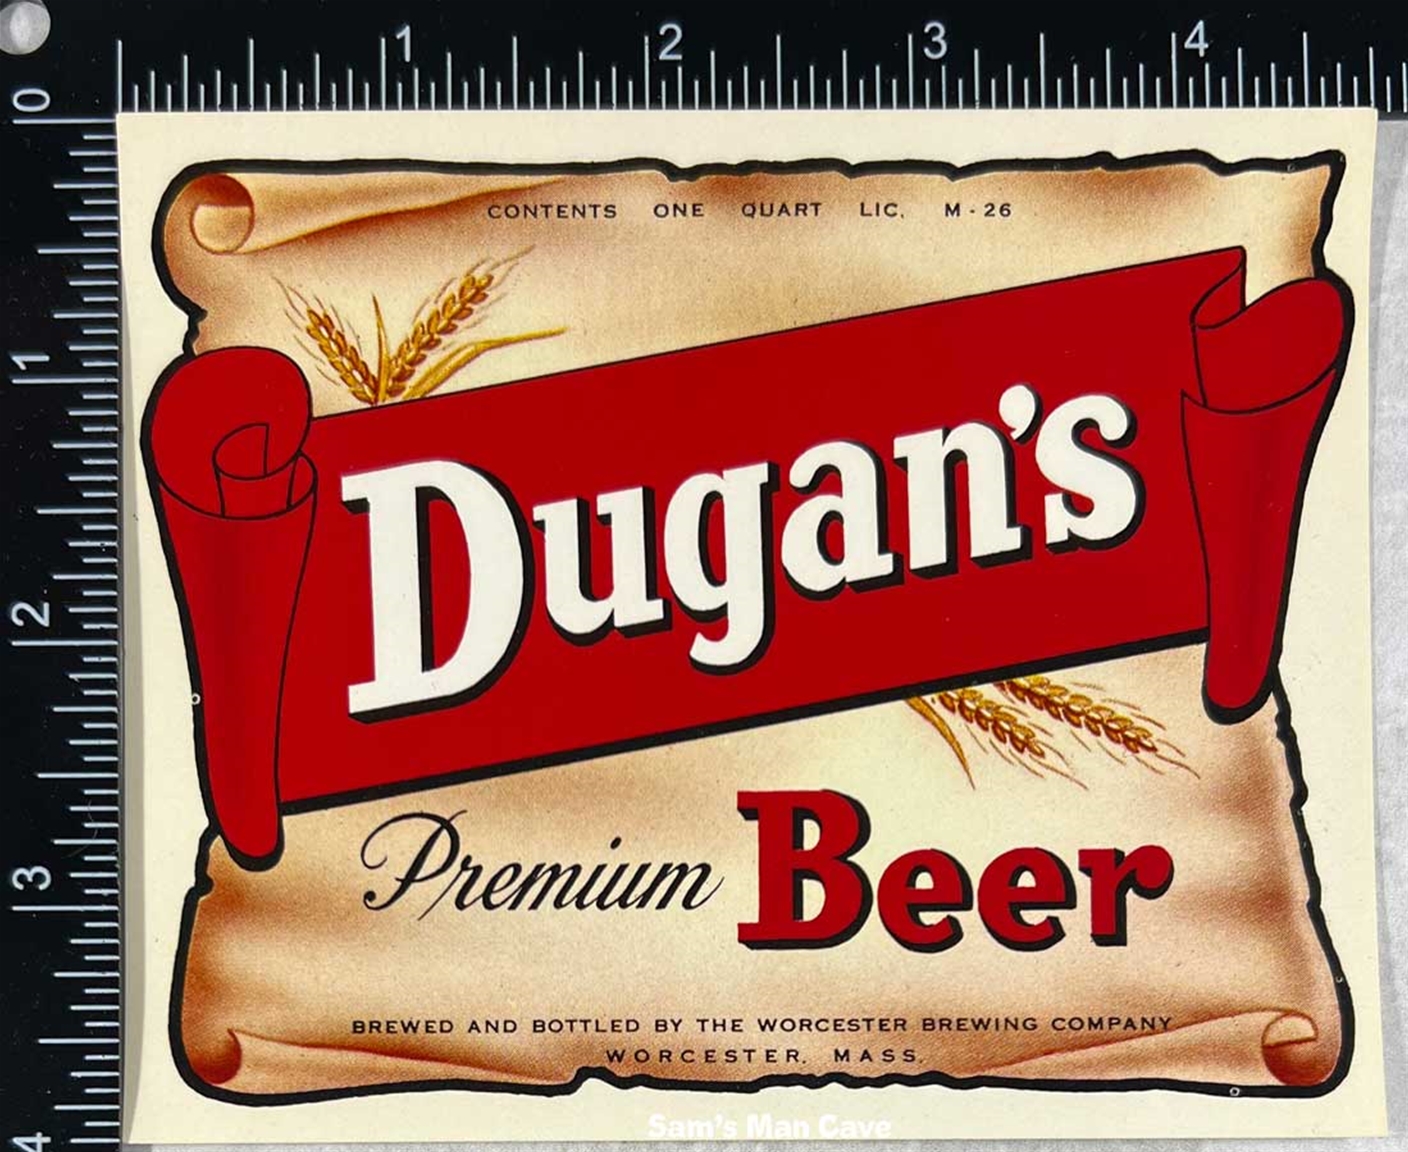 Dugan's Premium Beer Label